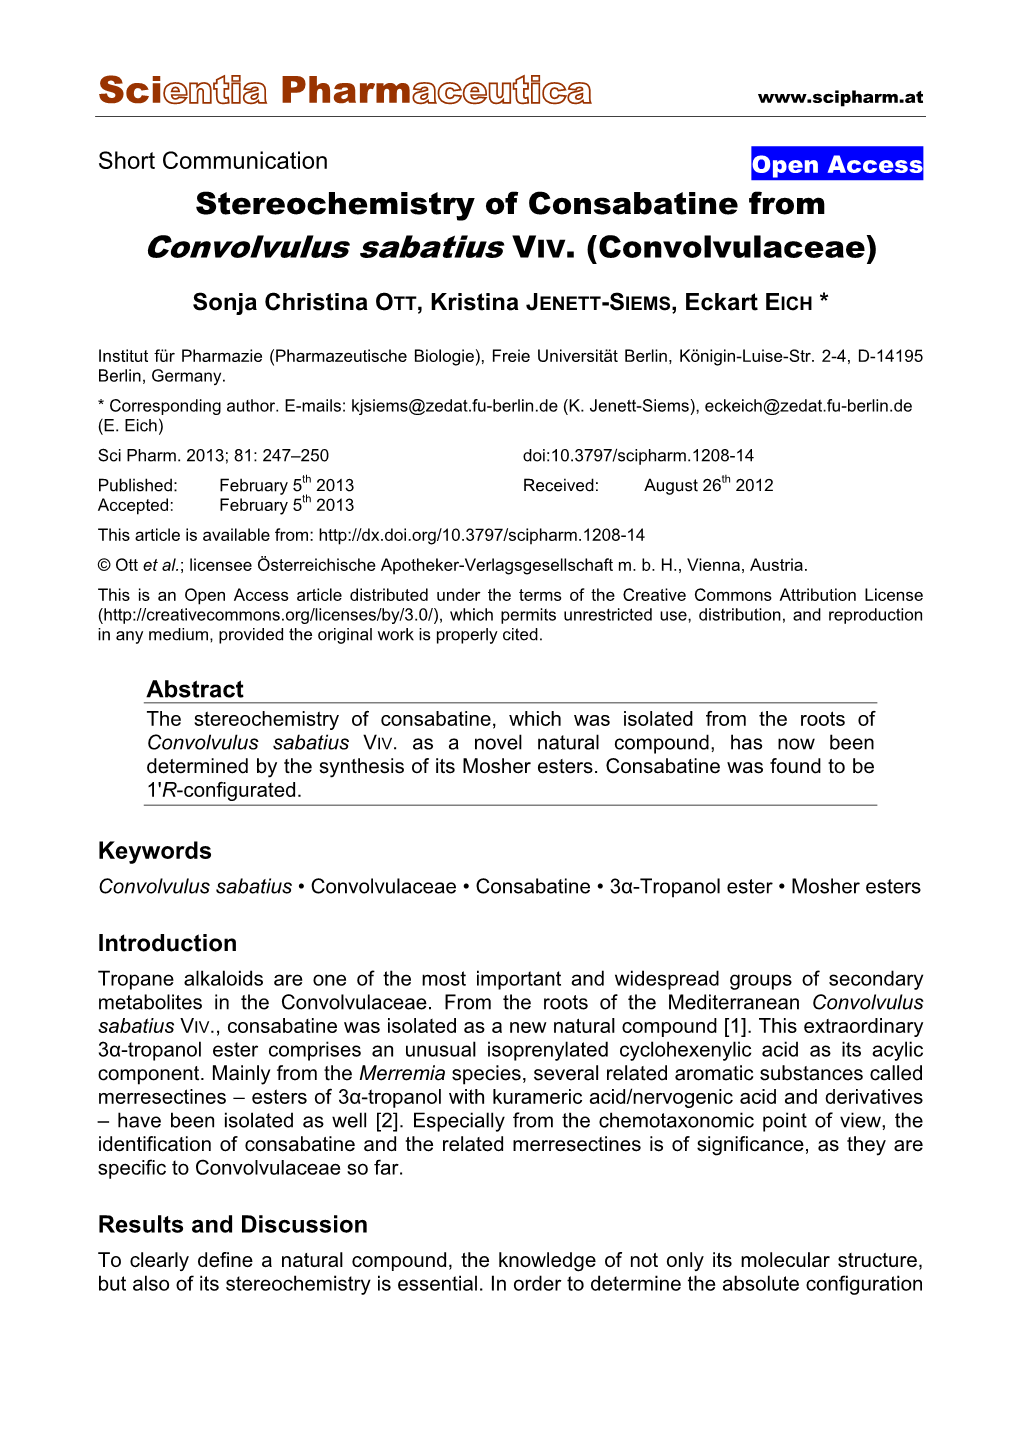 Stereochemistry of Consabatine from Convolvulus Sabatius VIV